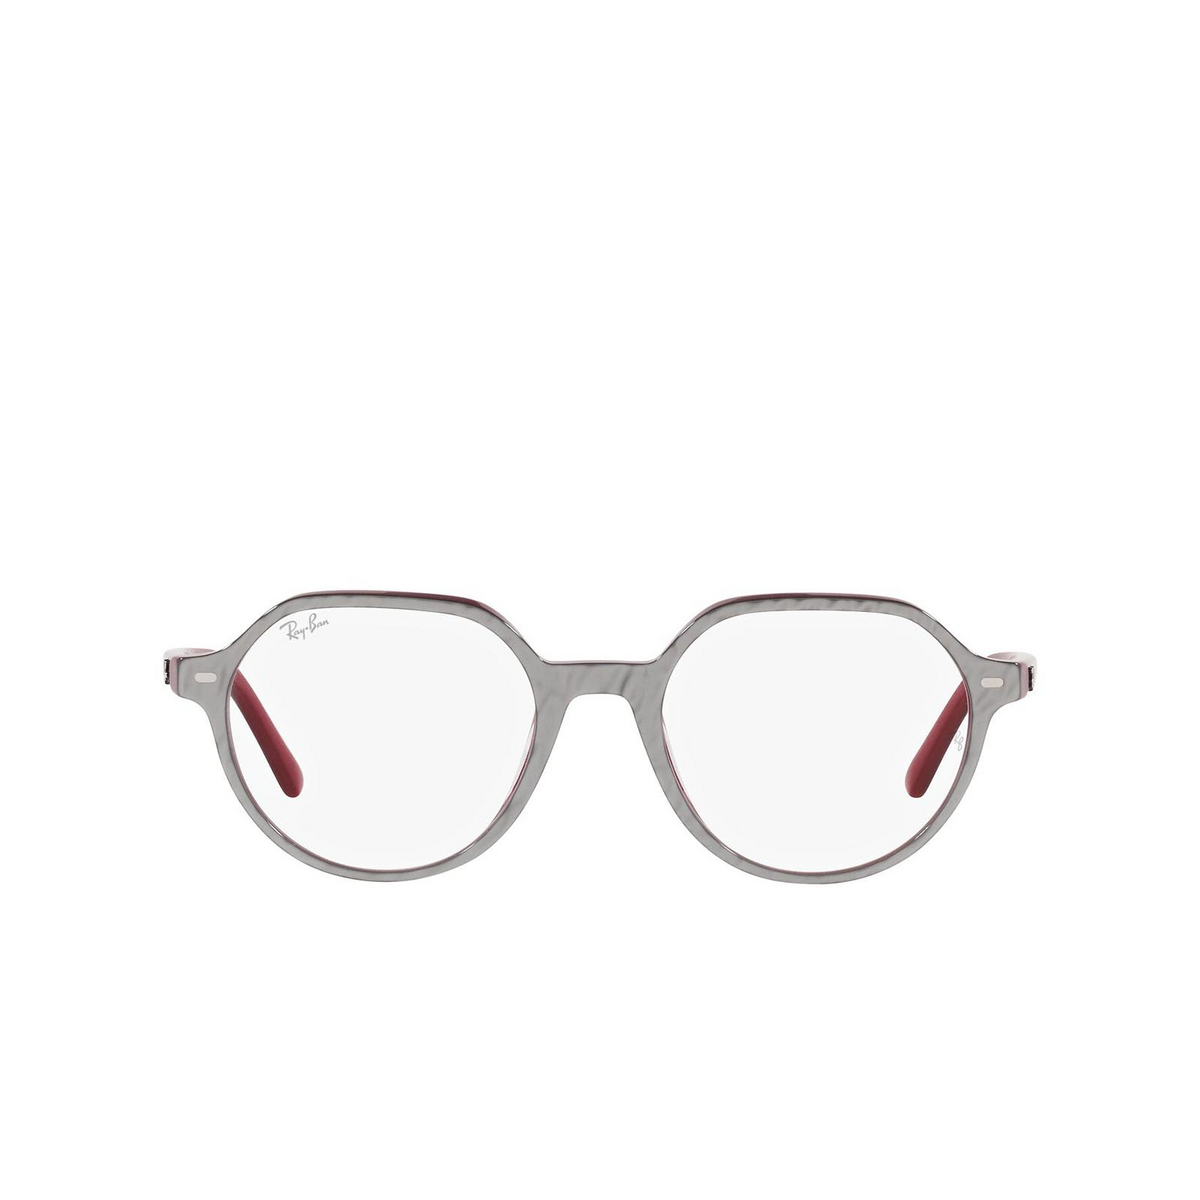 Ray-Ban THALIA Eyeglasses 8050 Wrinkled Grey on Bordeaux - front view